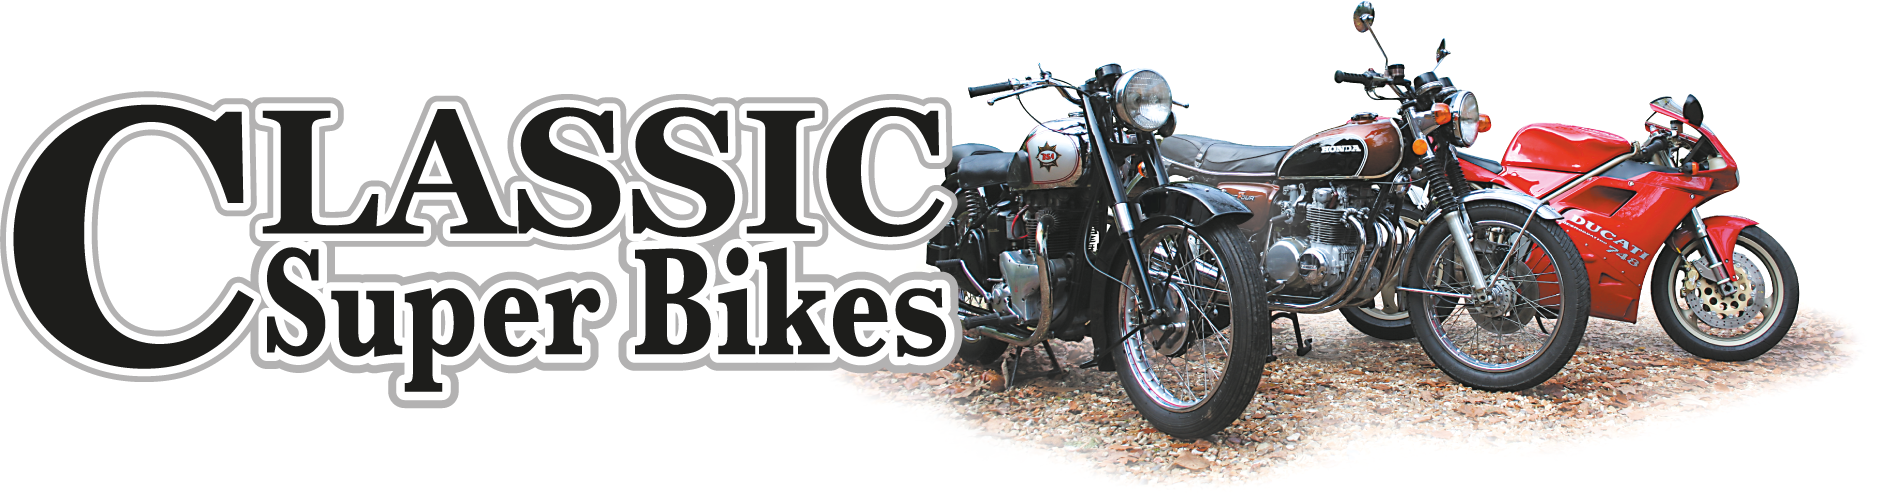 vintage british motorcycles for sale uk